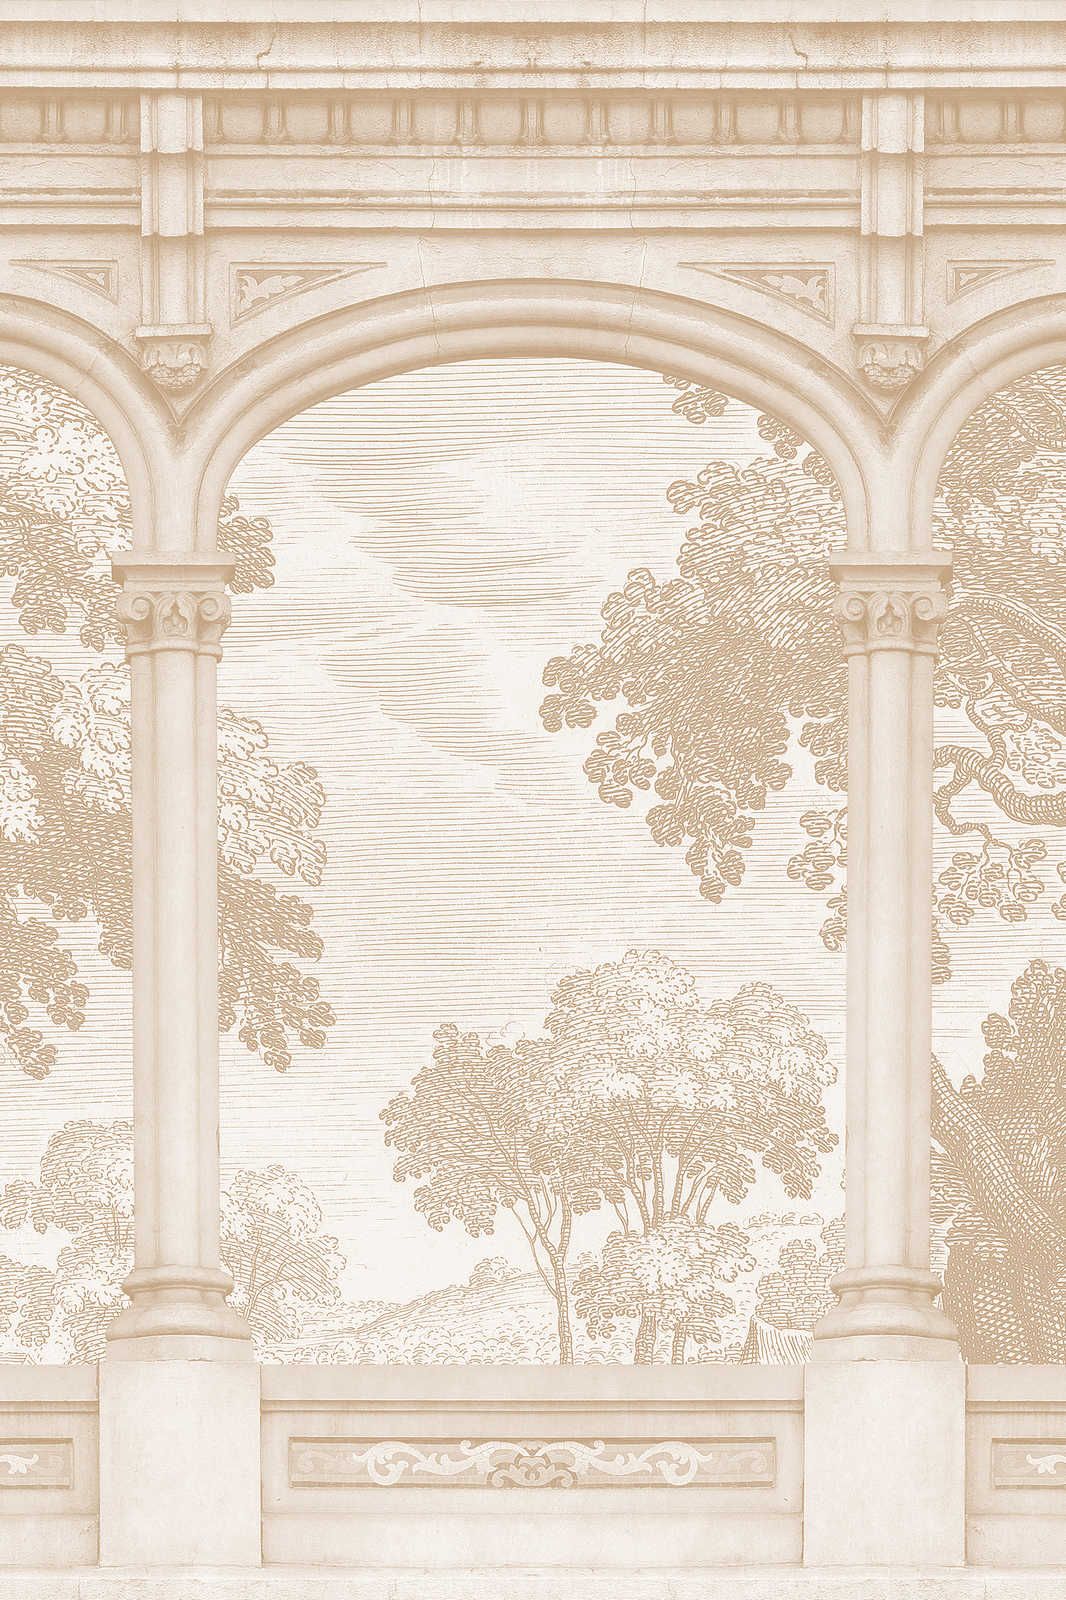             Roma 2 - Lienzo beige Diseño histórico con ventana de arco redondo - 0,90 m x 0,60 m
        